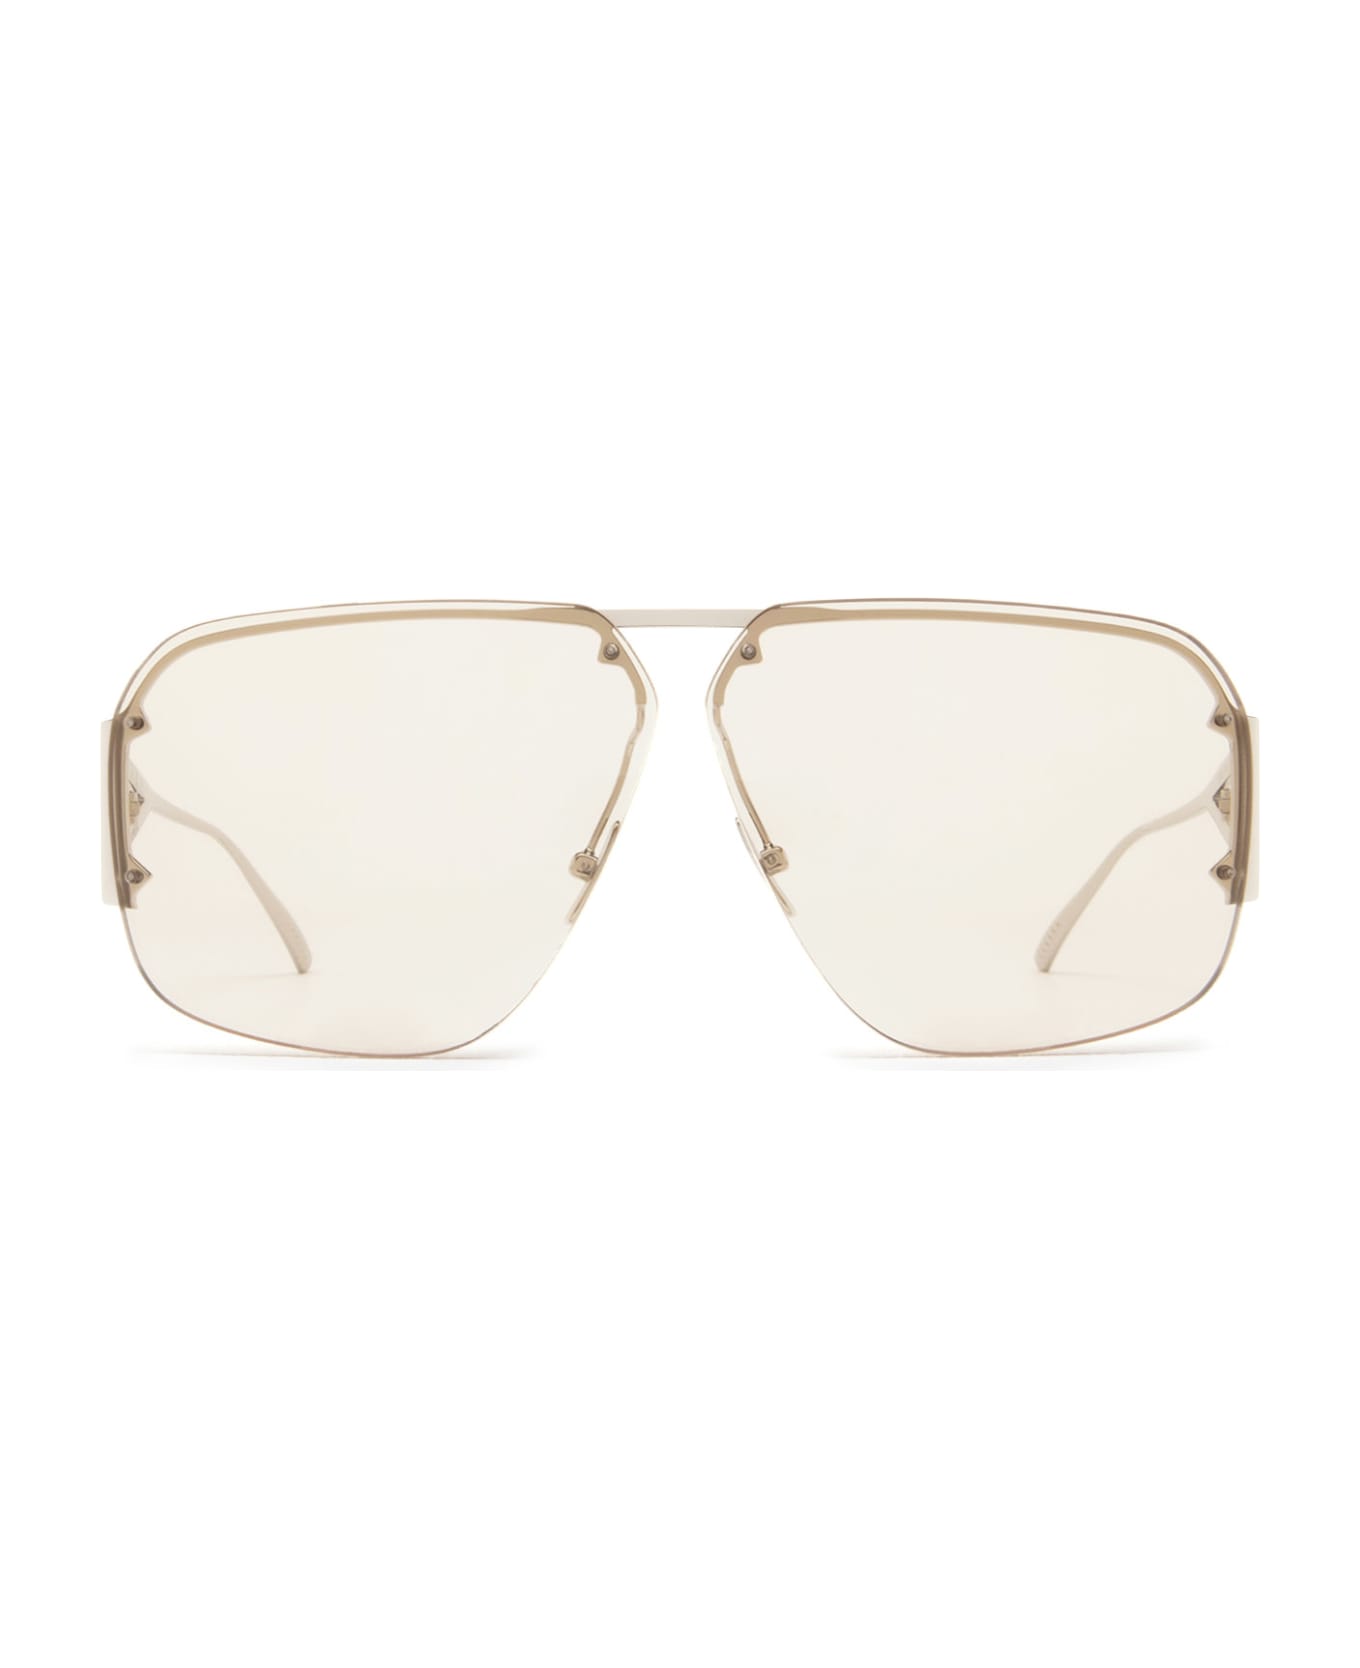 Bottega Veneta Eyewear Bv1065s Silver Sunglasses - Silver